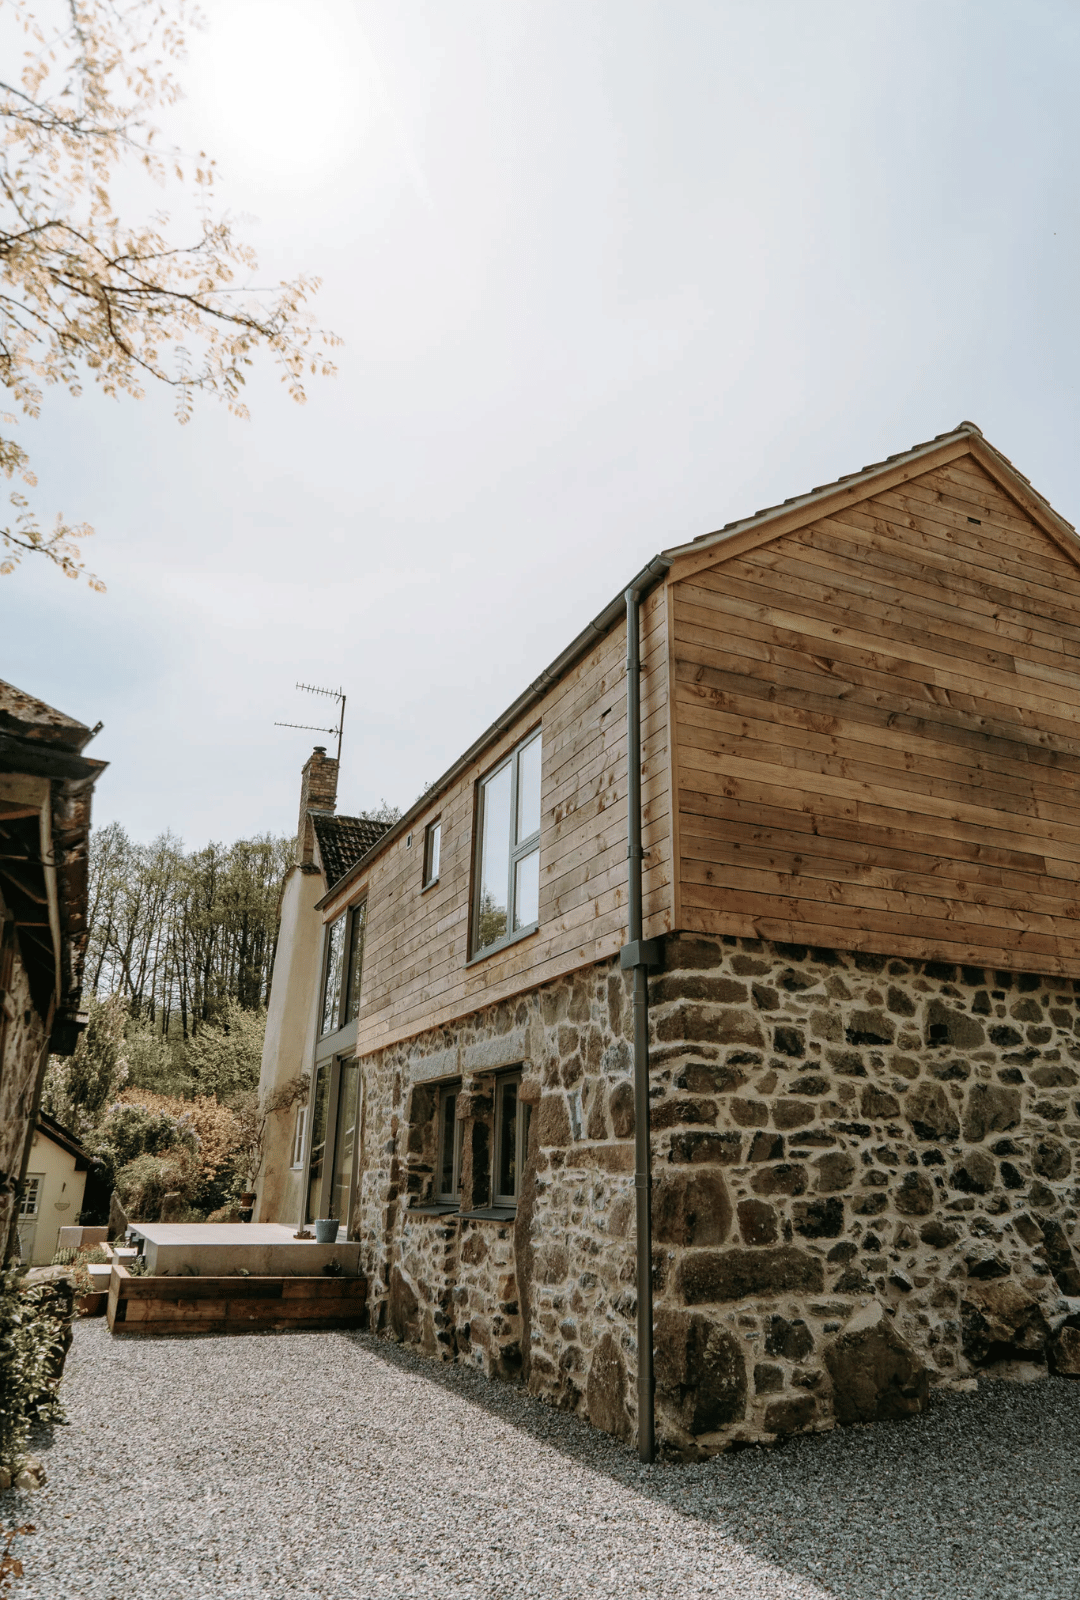 Armada property - Property Development -   stone farm project - Beautiful rustic farm house - exterior two story renovation